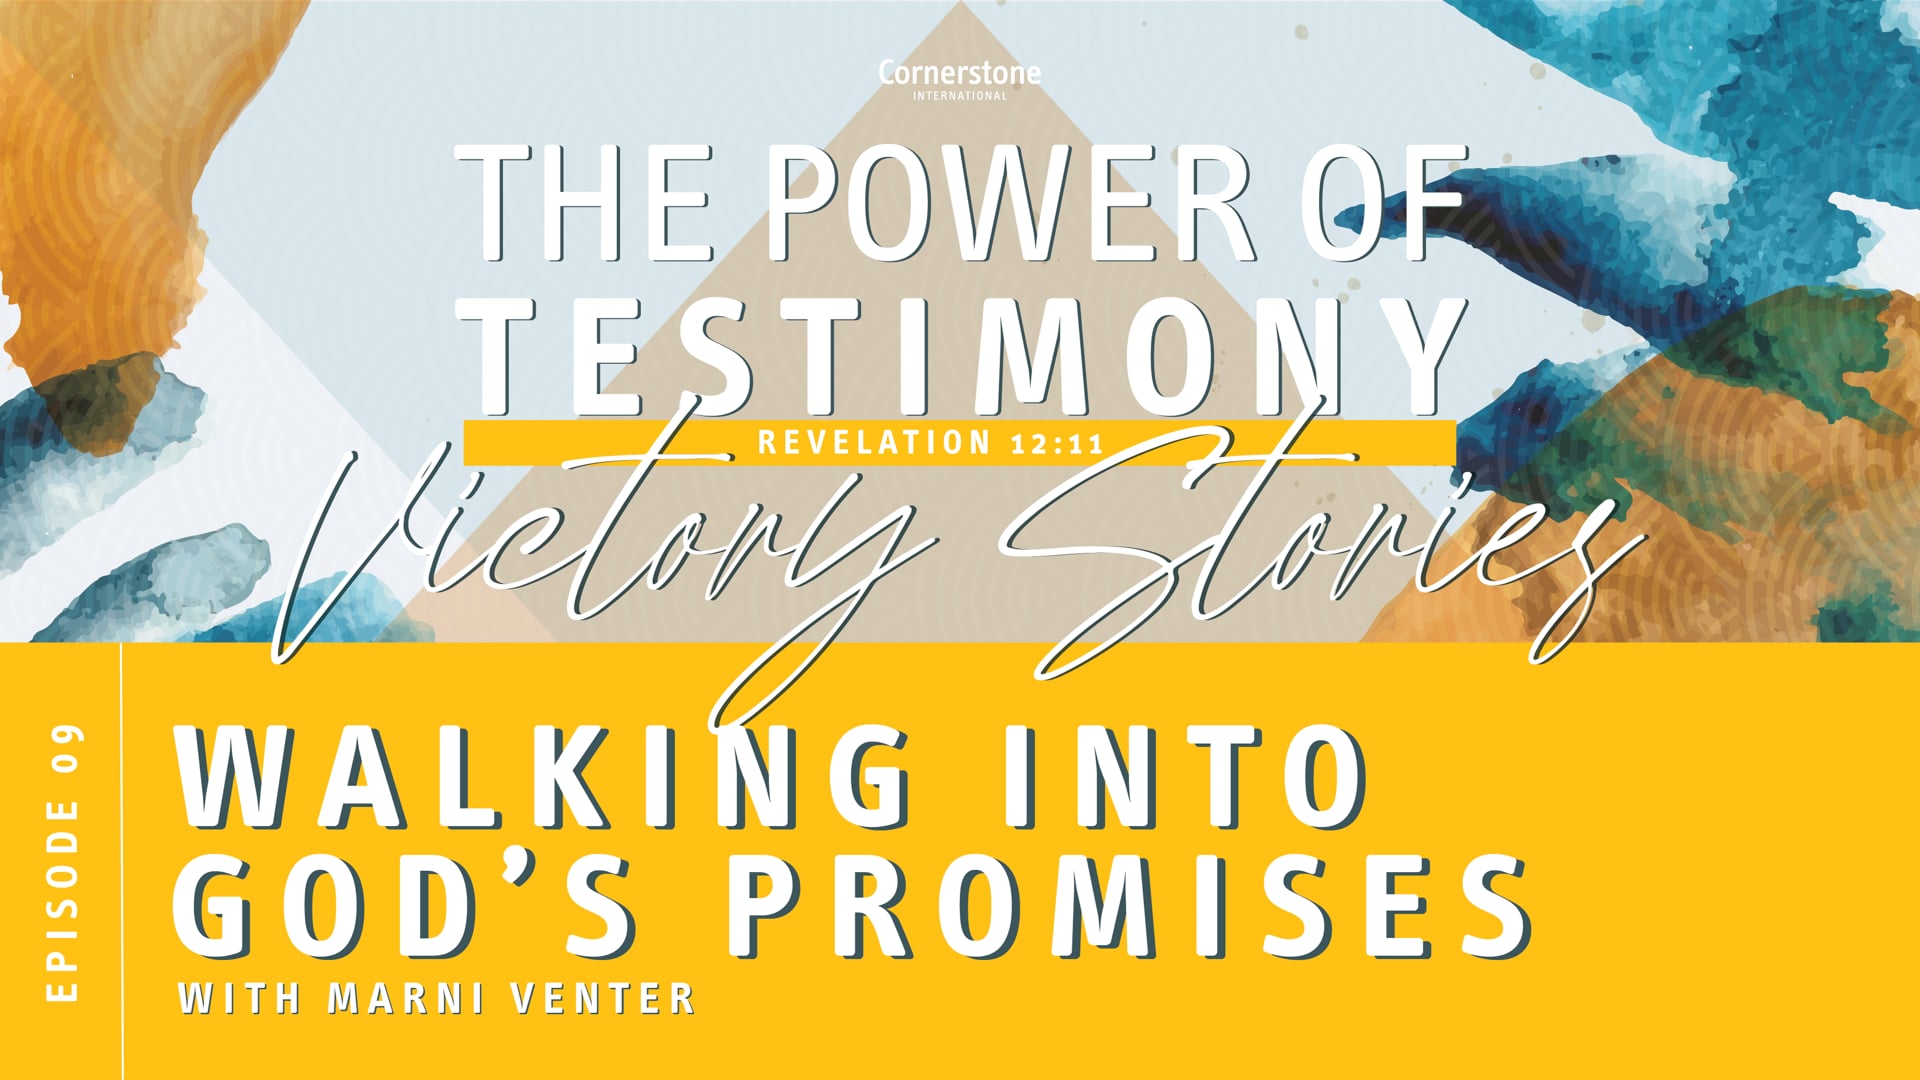 The Power Of Testimonies, Episode 09: Walking into God’s promises